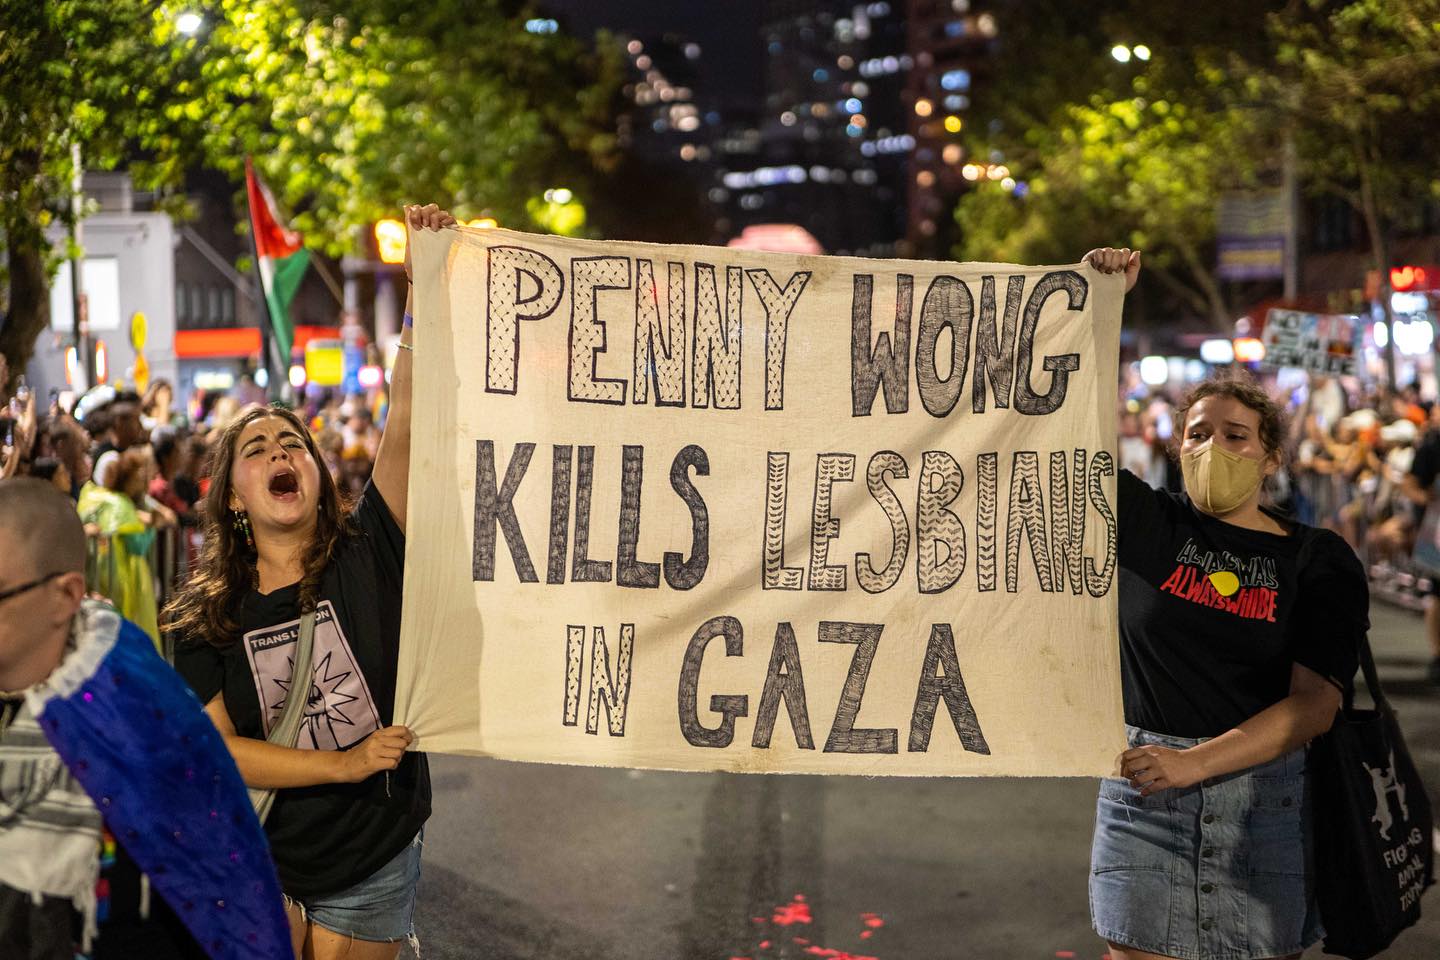 Penny Wong kills lesbians in Gaza.